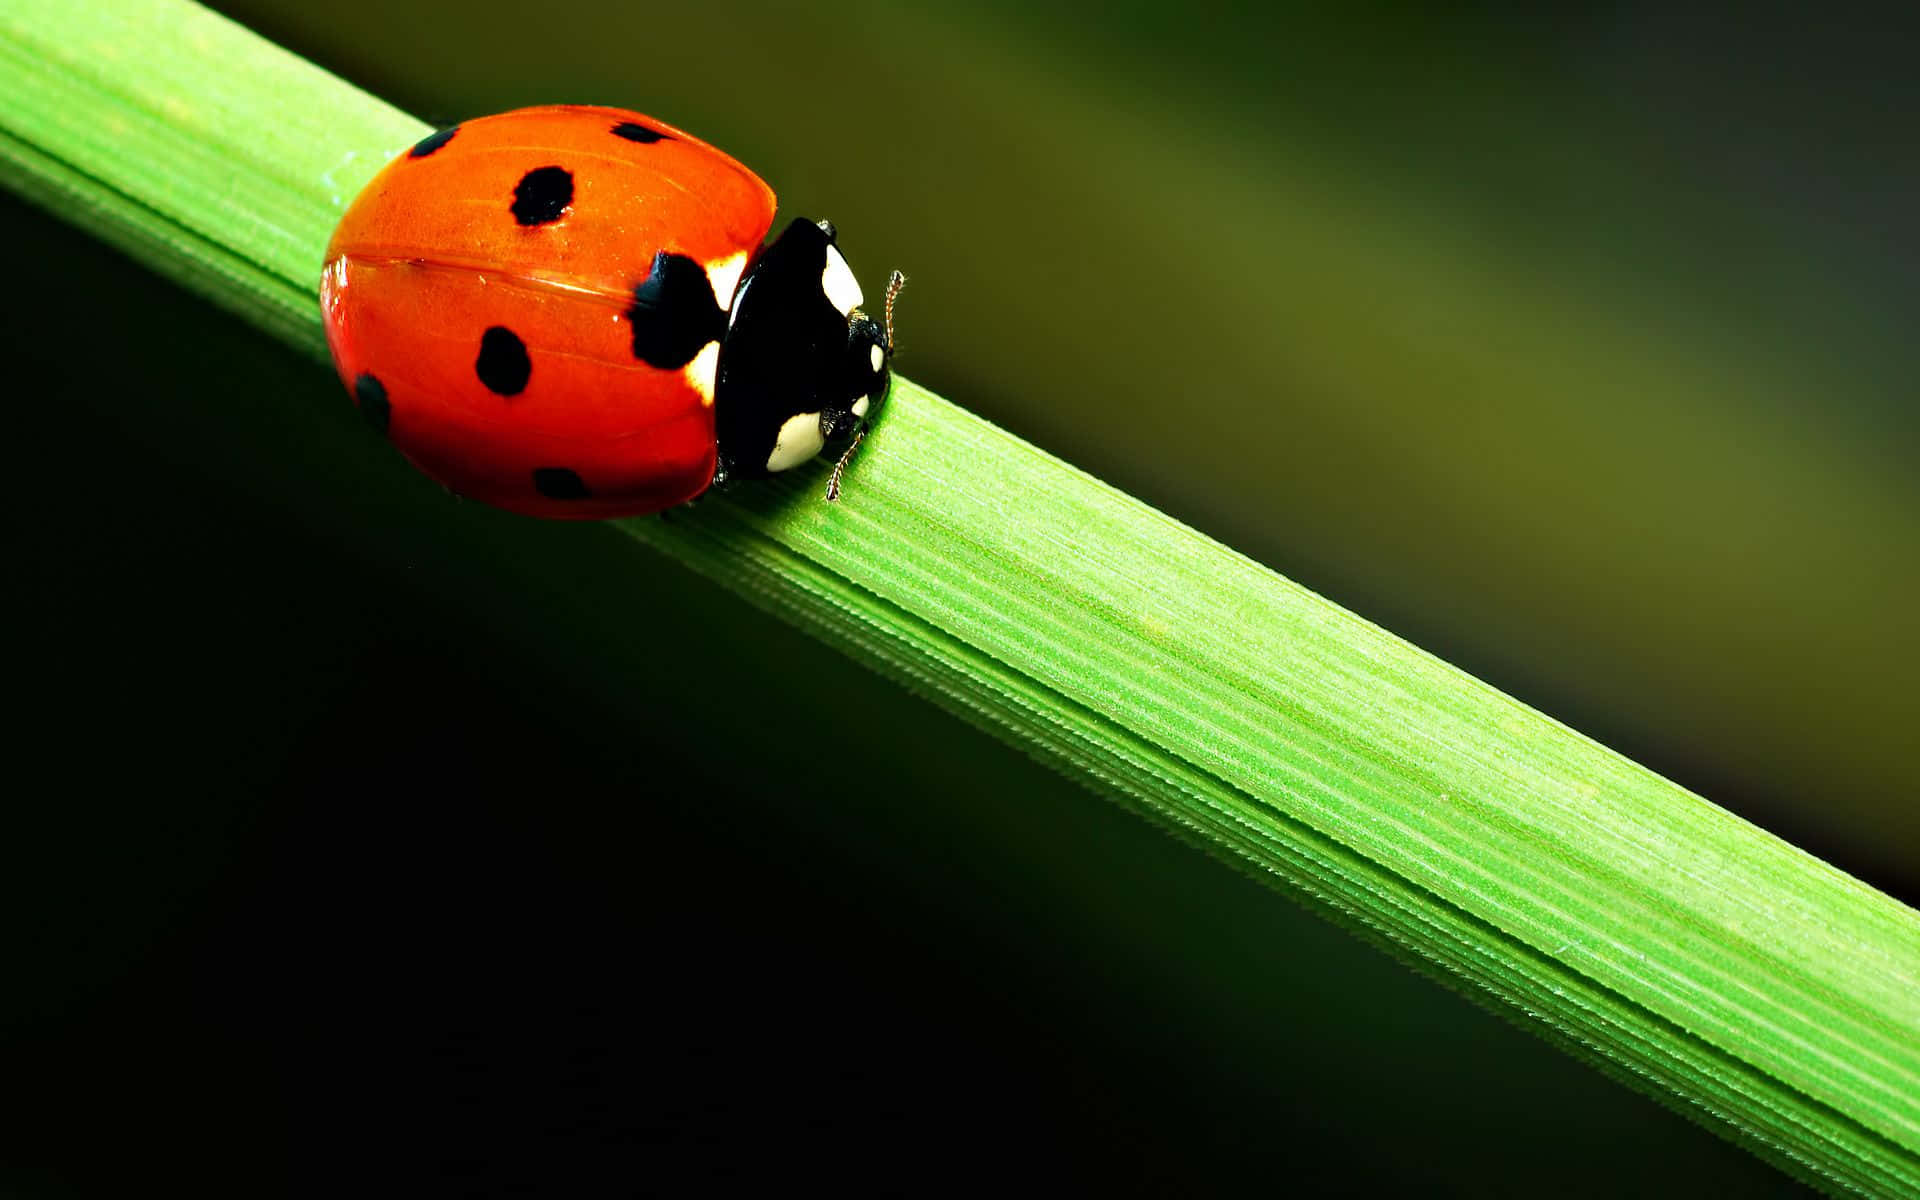 Colorful ladybug on a green leaf